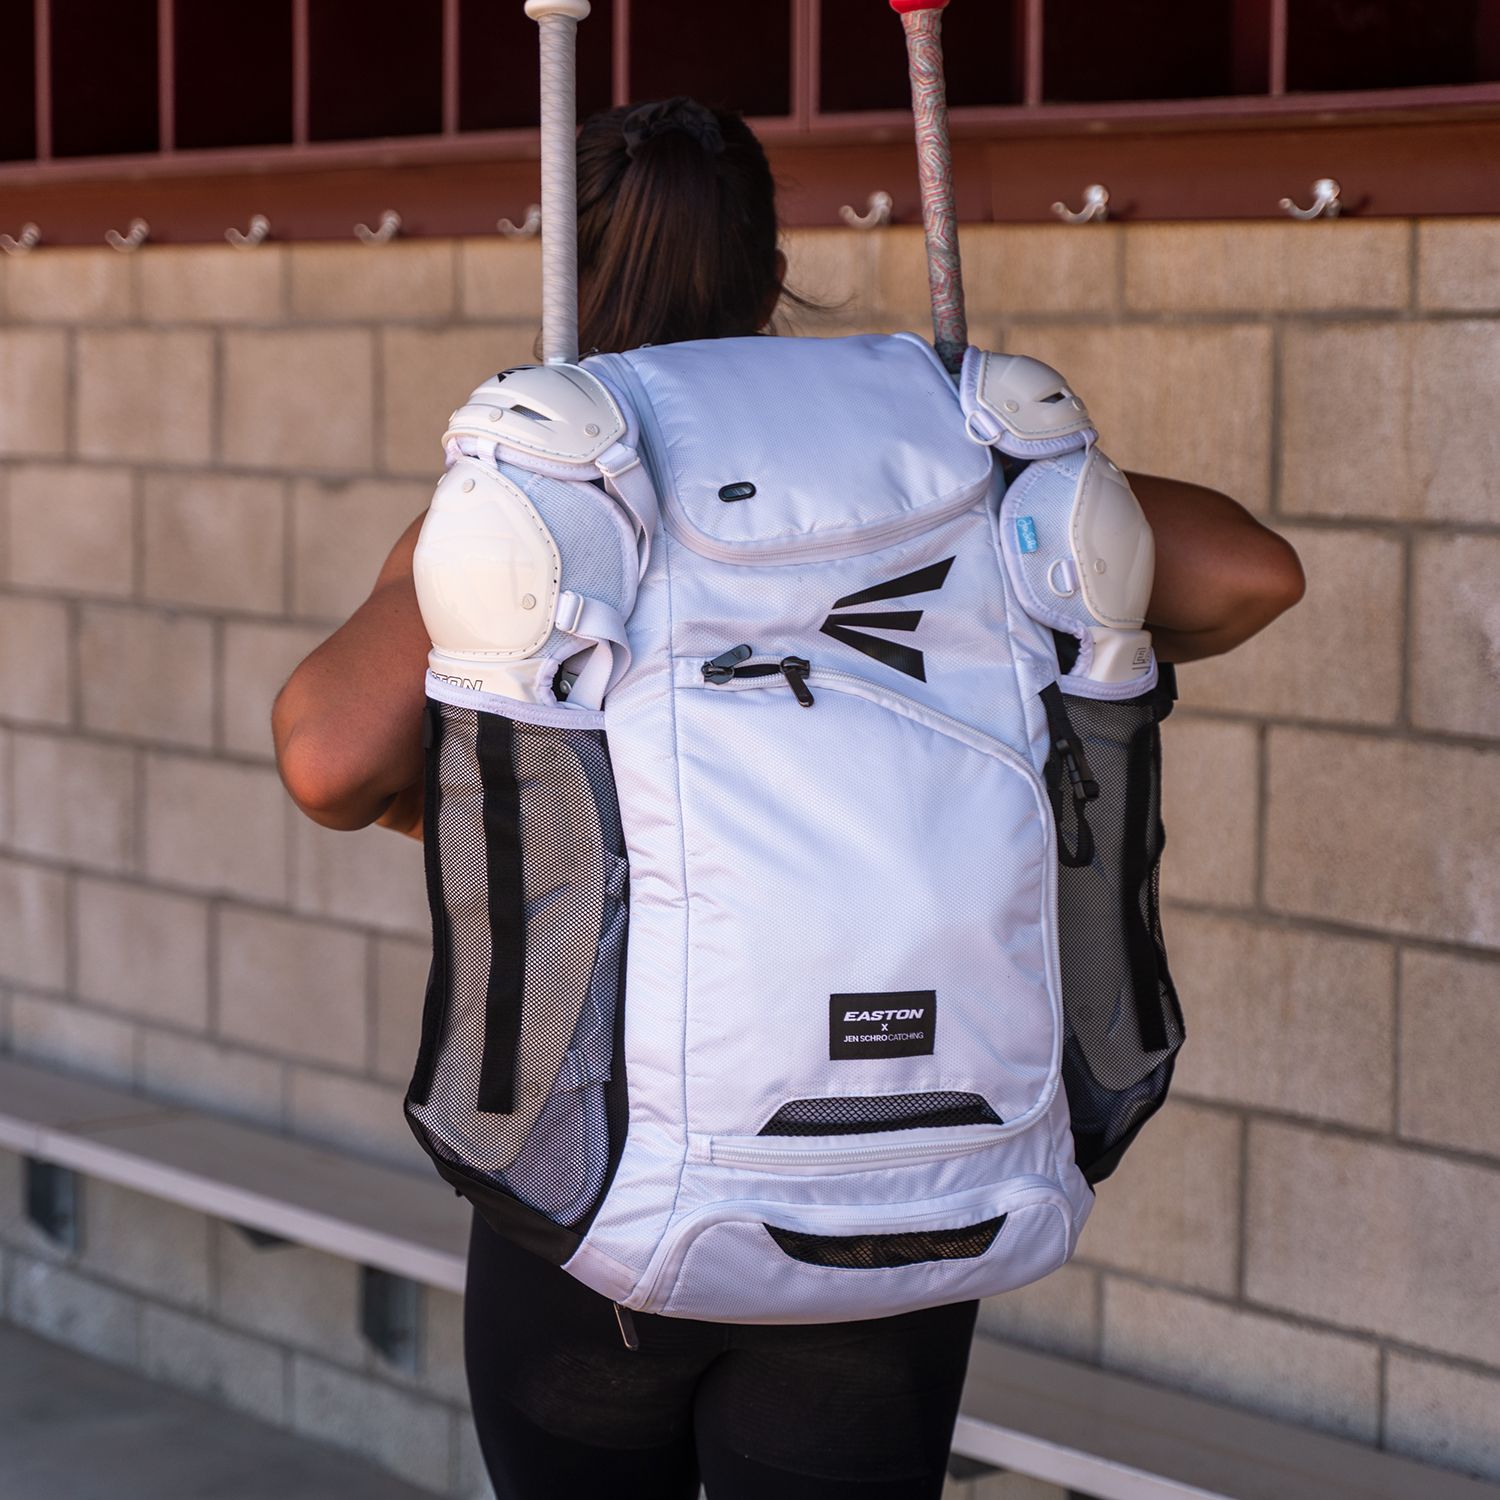 Easton x Jen Schro Softball Catcher's Backpack